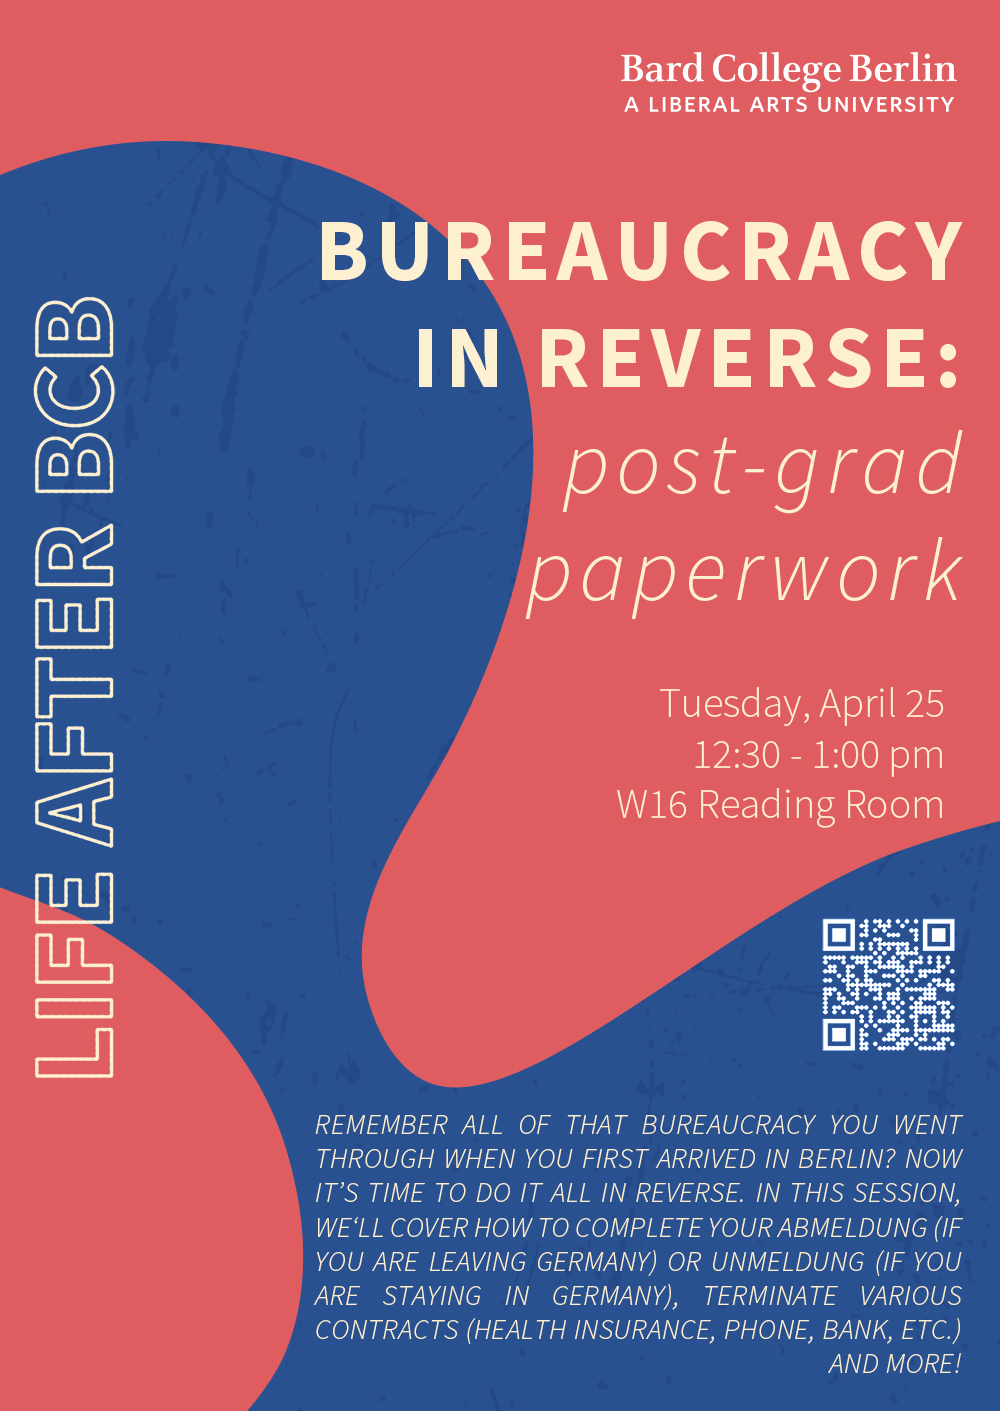 Bureaucracy in Reverse: Post-Grad Paperwork (Session II)